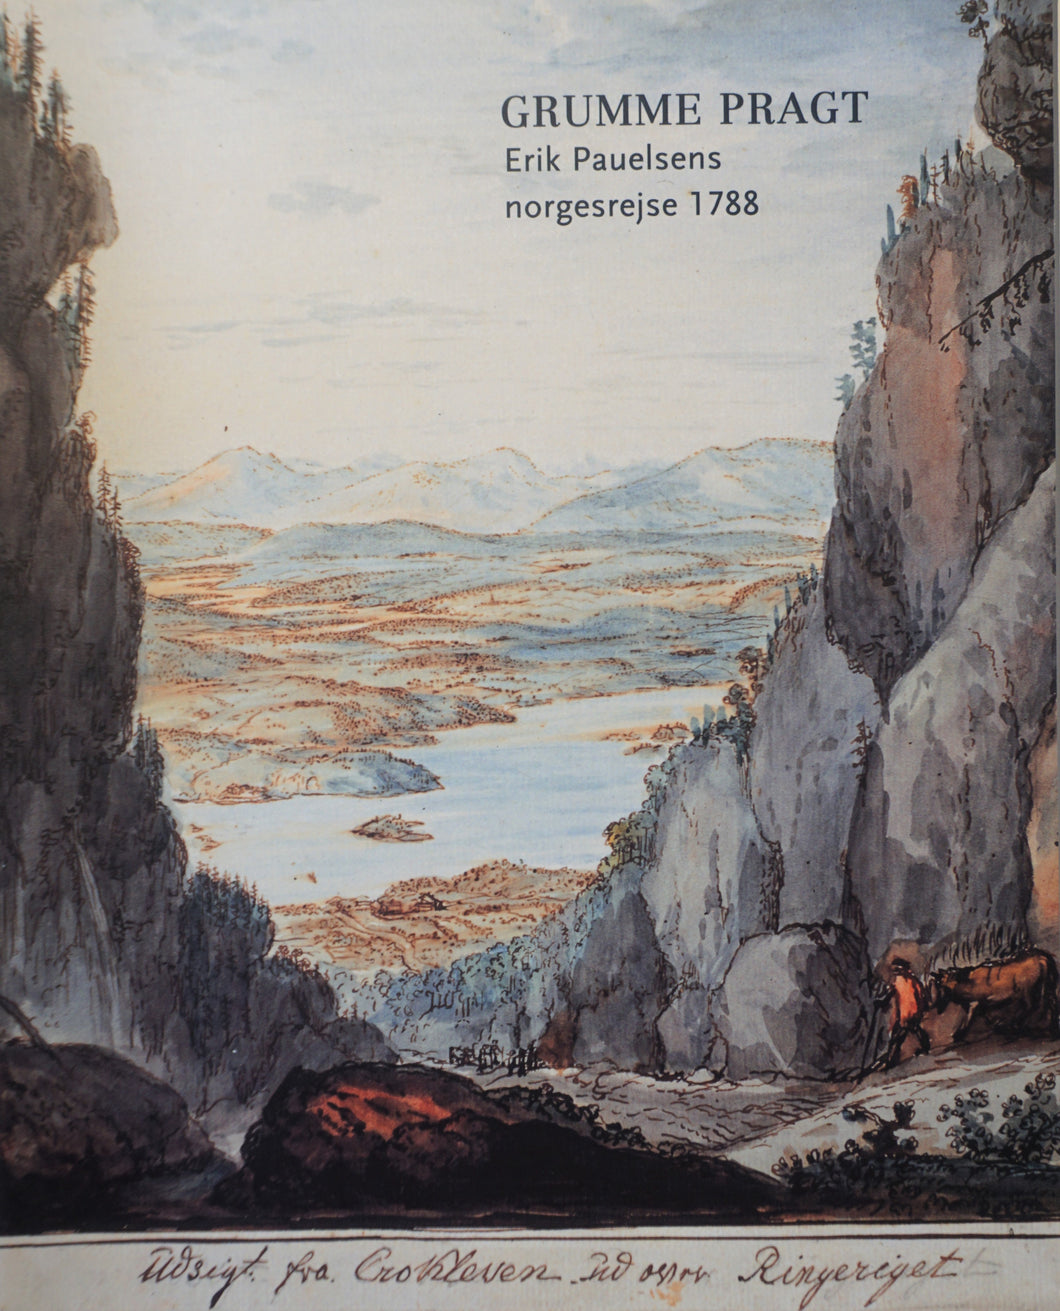 Grumme Pragt, Erik Pauelsens Norgesrejse 1788